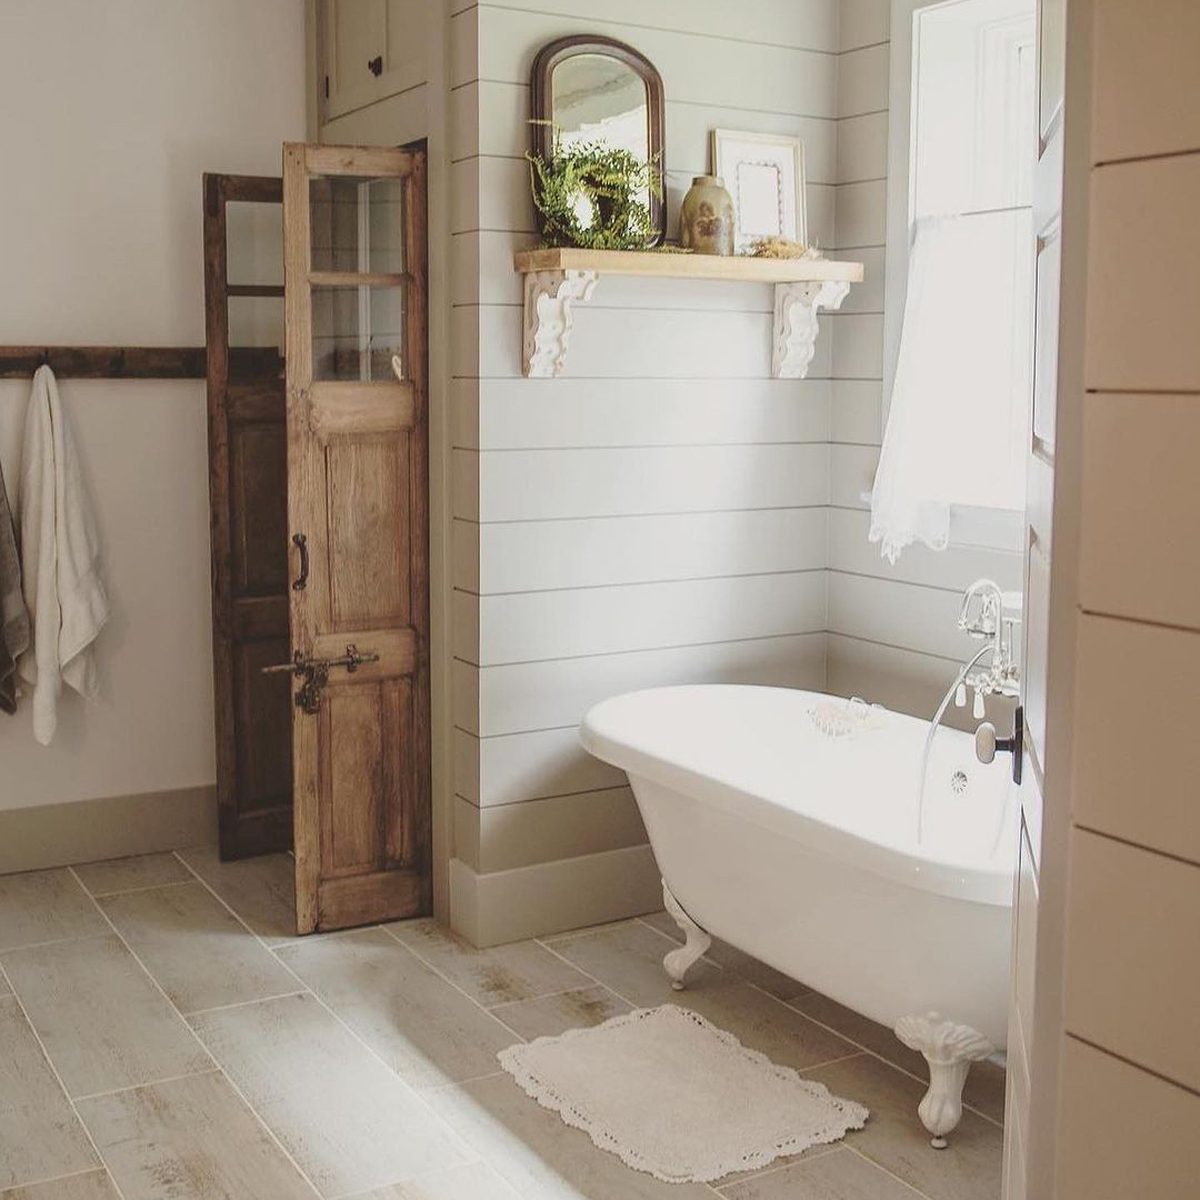 A vintage looking bathroom with bathtub and wooden door